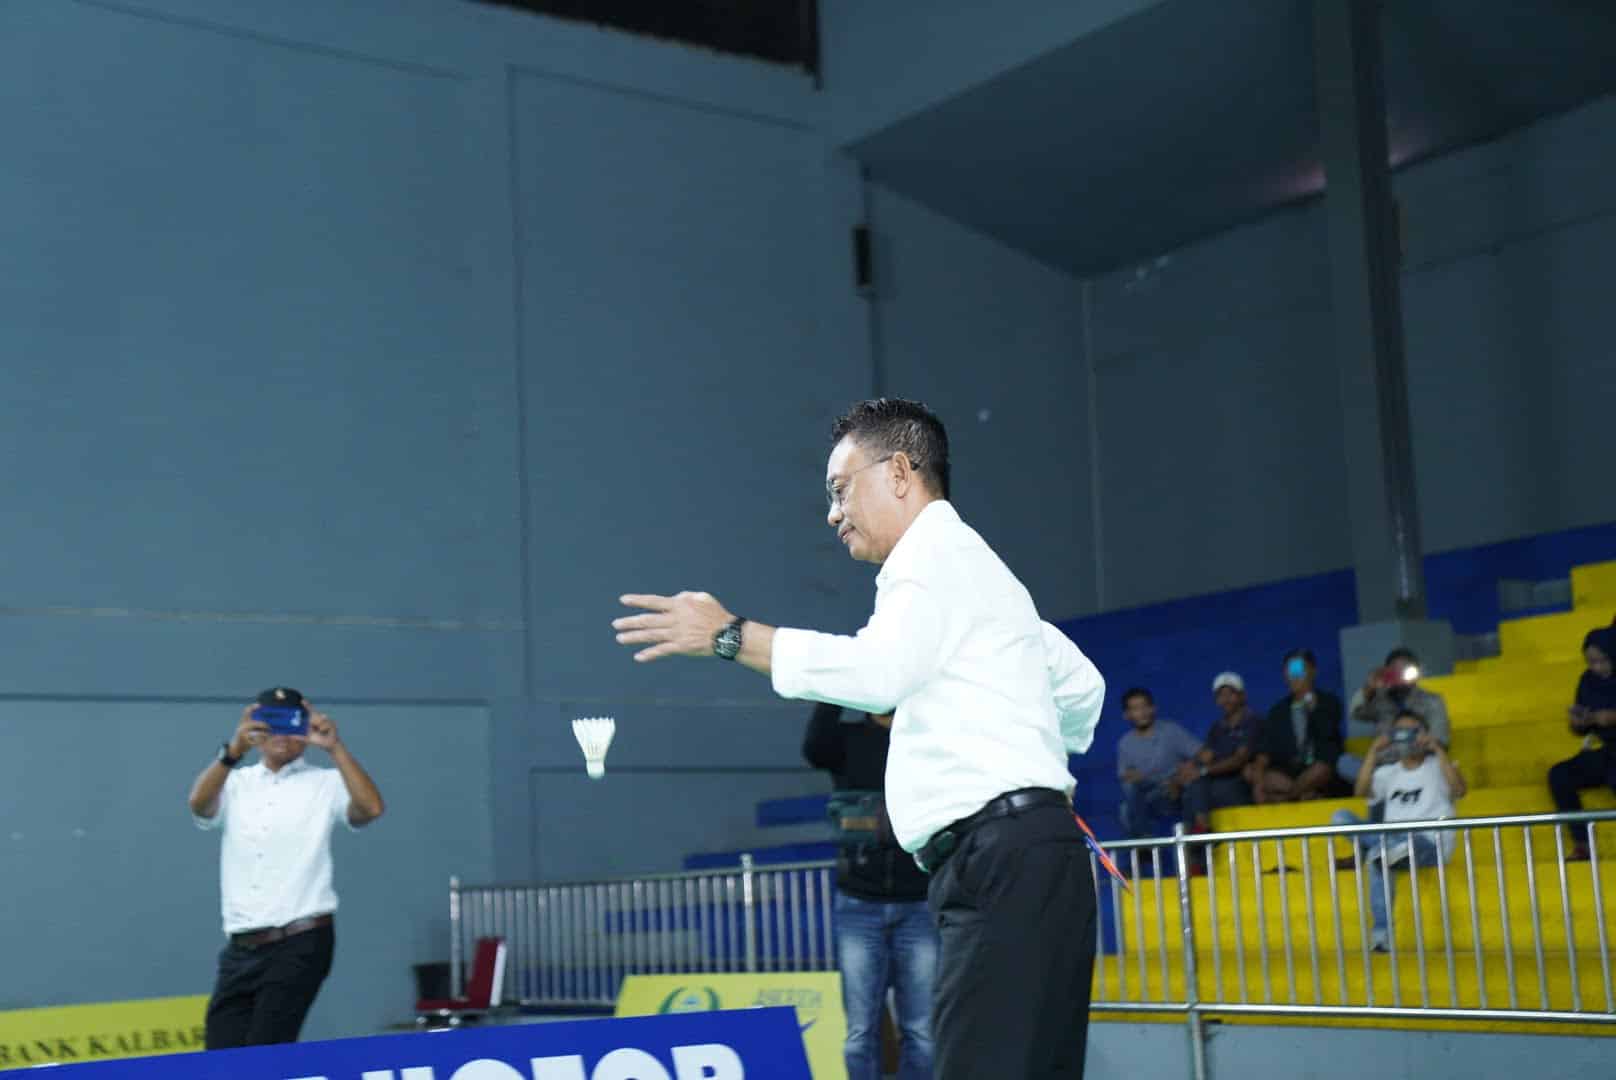 Wali Kota Pontianak, Edi Rusdi Kamtono melakukan servis perdana sebagai tanda dimulainya Victor Wali Kota Pontianak Open 2022 di GOR Bumi Khatulistiwa. (Prokopim For KalbarOnline.com)